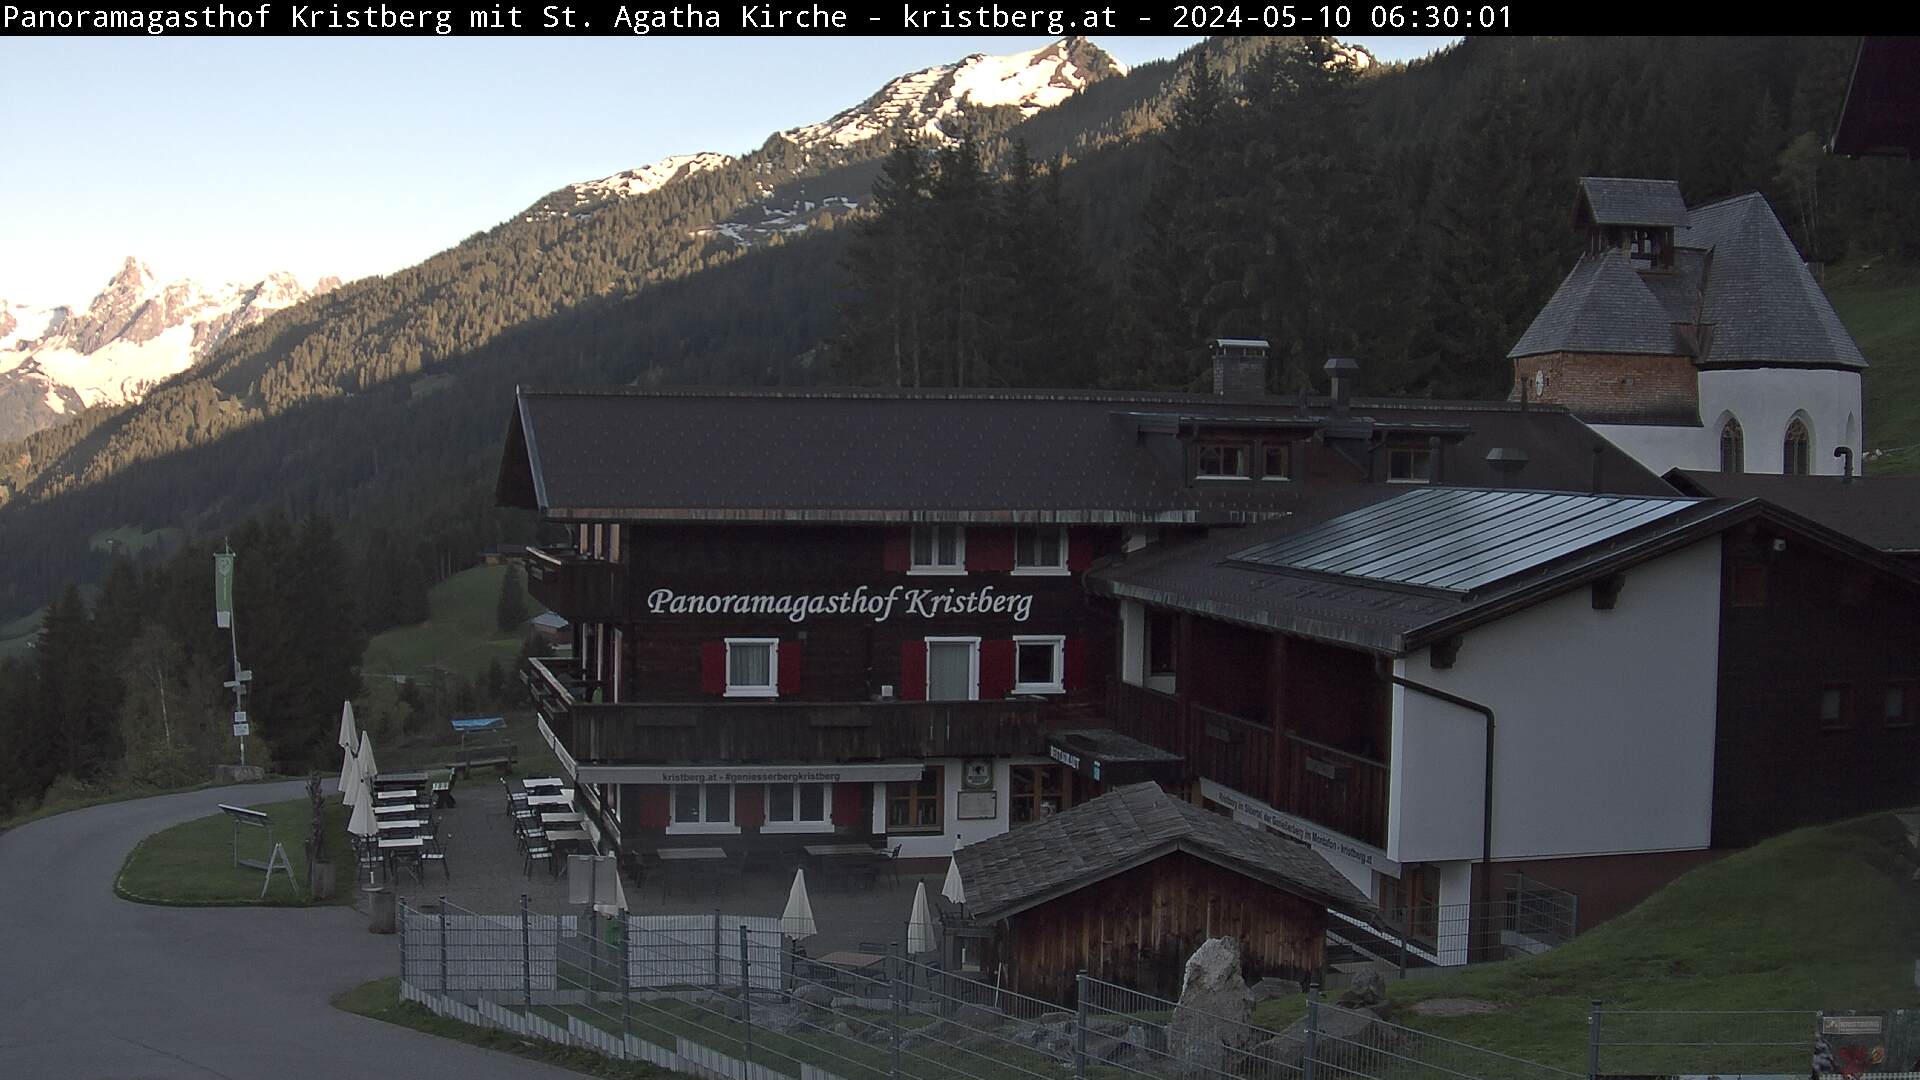 Webcam in Silbertal